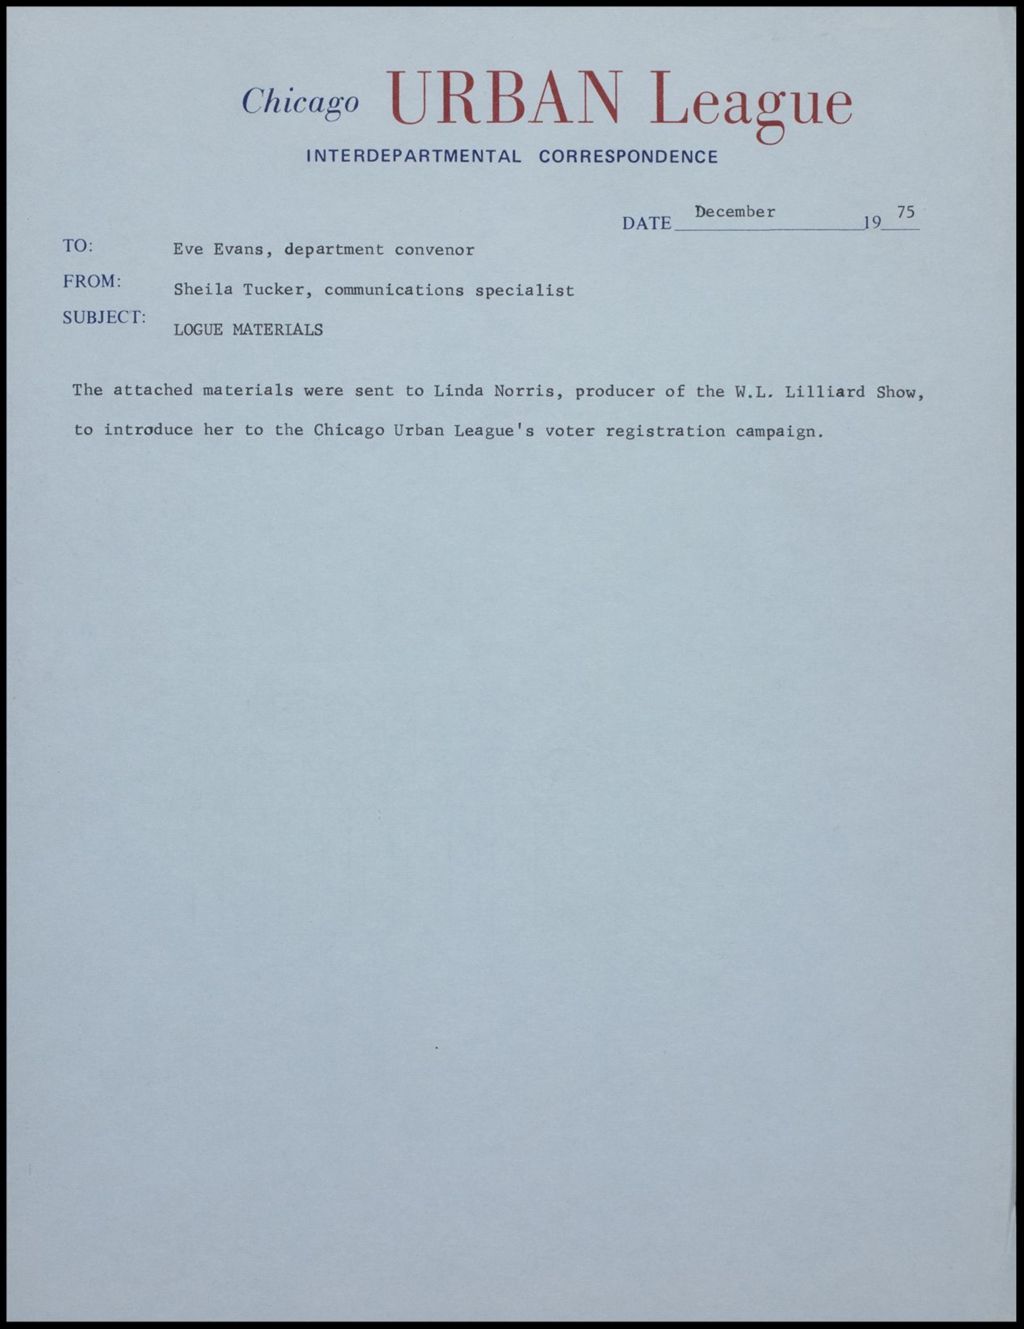 Fact Sheets and Correspondence, 1975 (Folder II-2133)